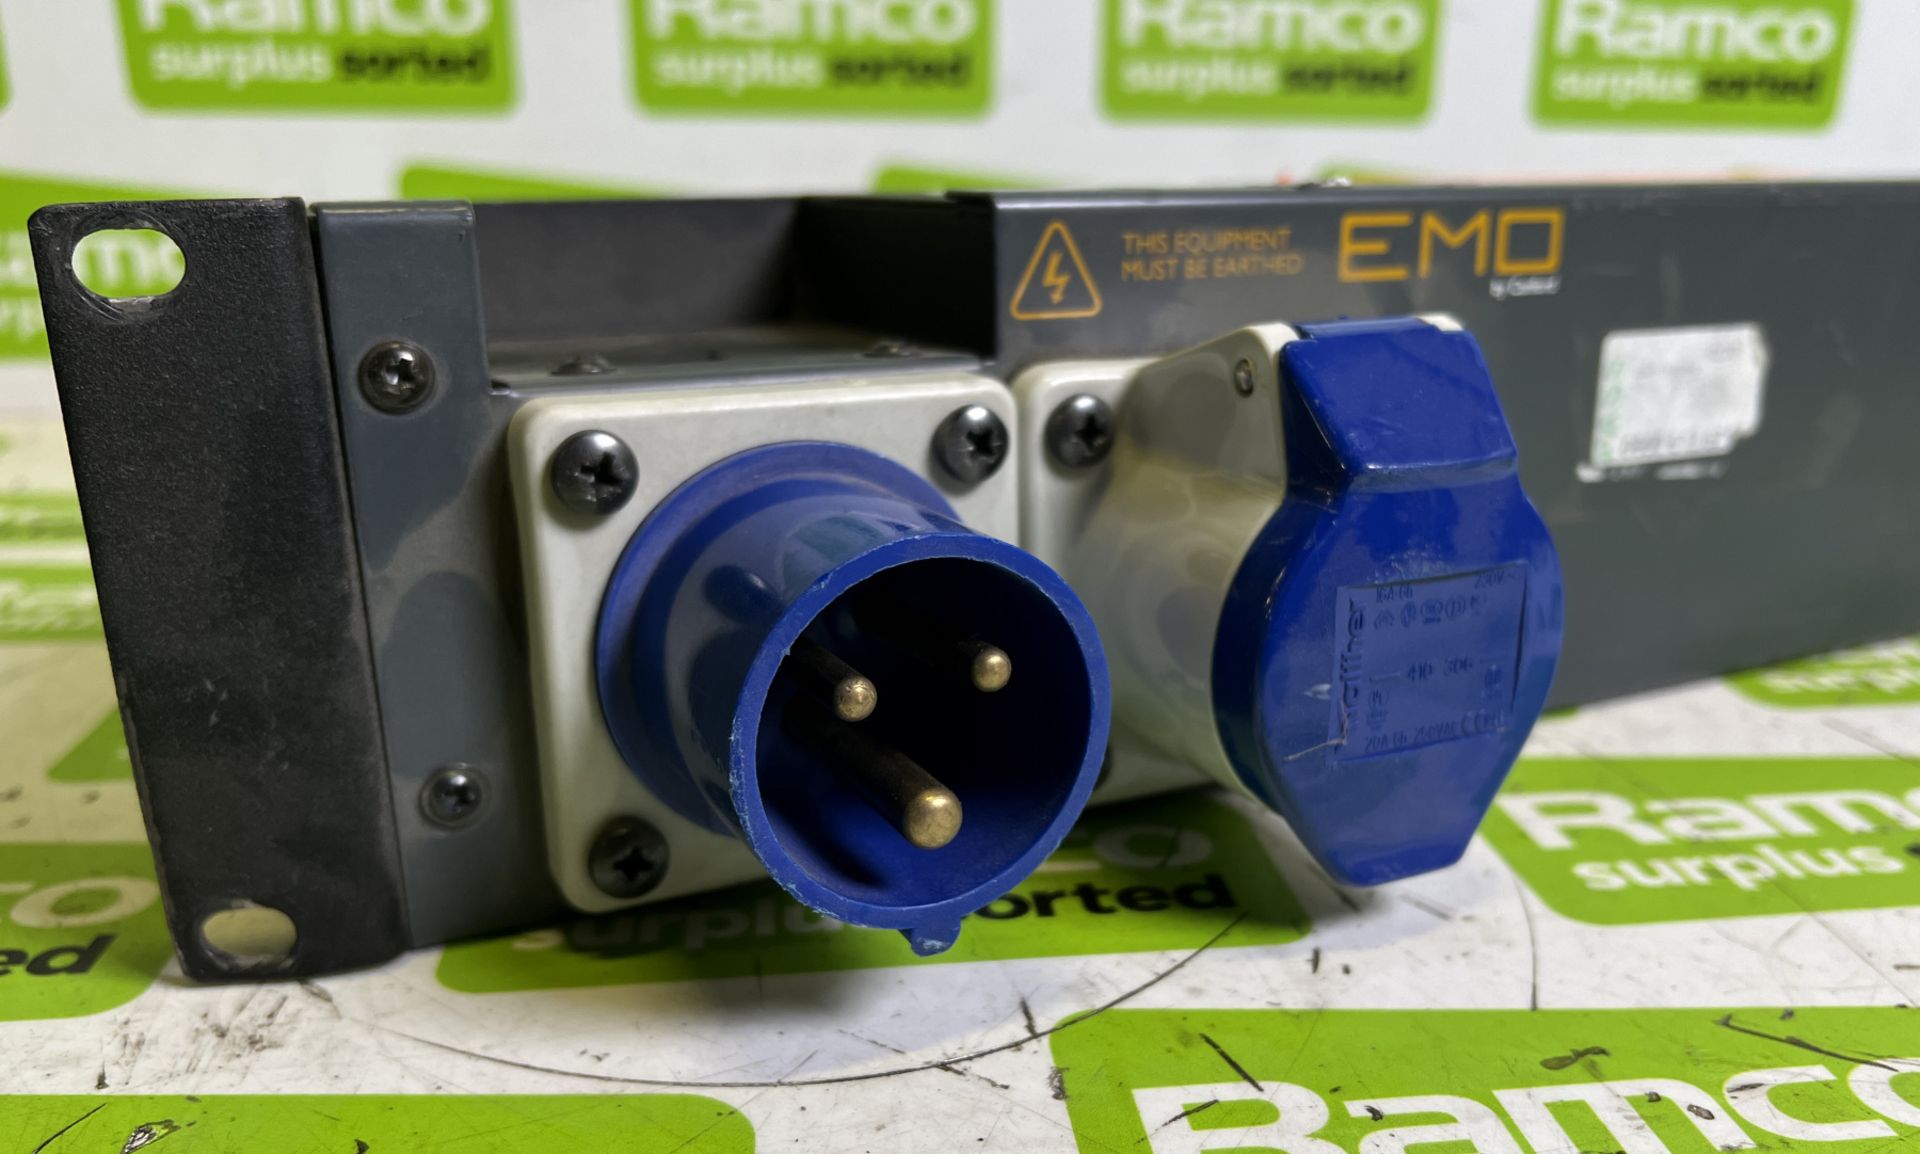 EMO rack mount power distro - Image 2 of 4